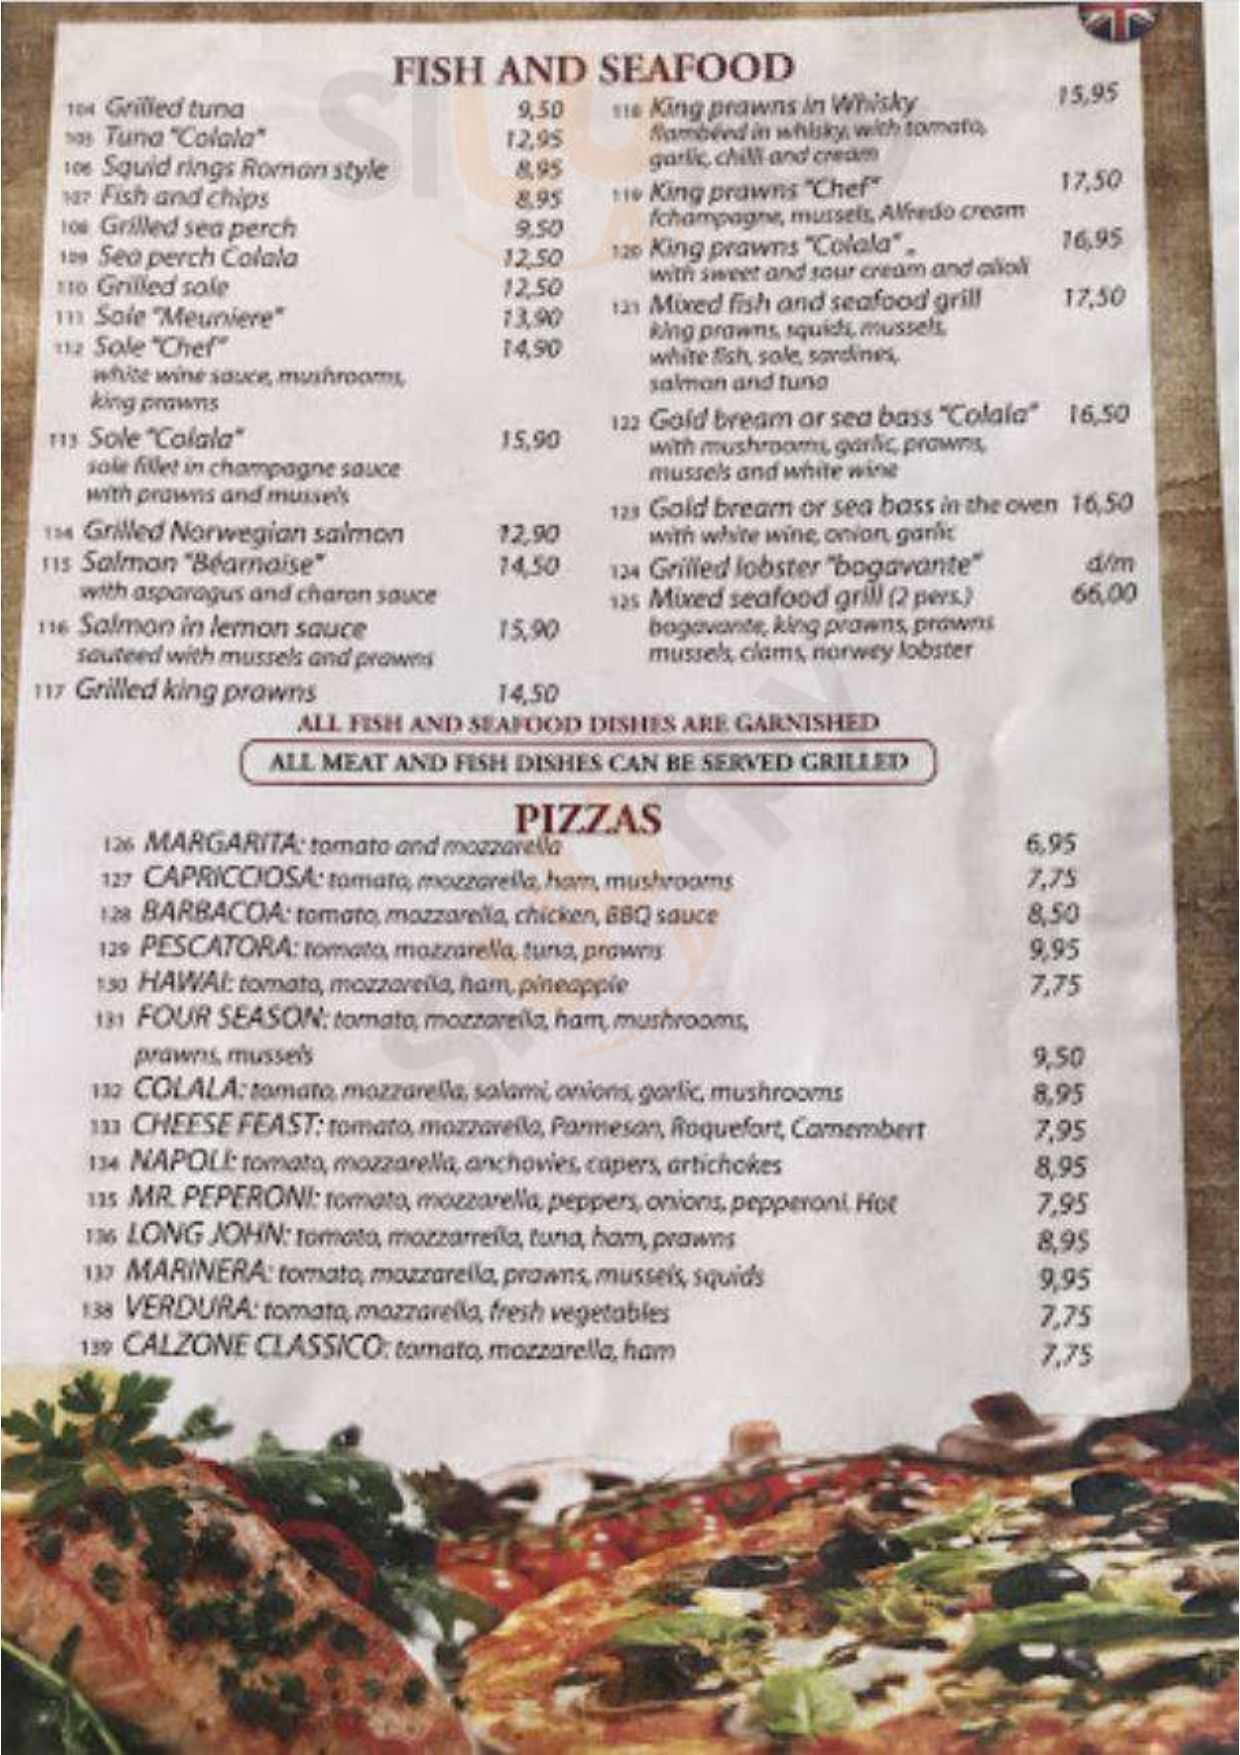 Restaurante Pizzeria Colala Costa Adeje Menu - 1